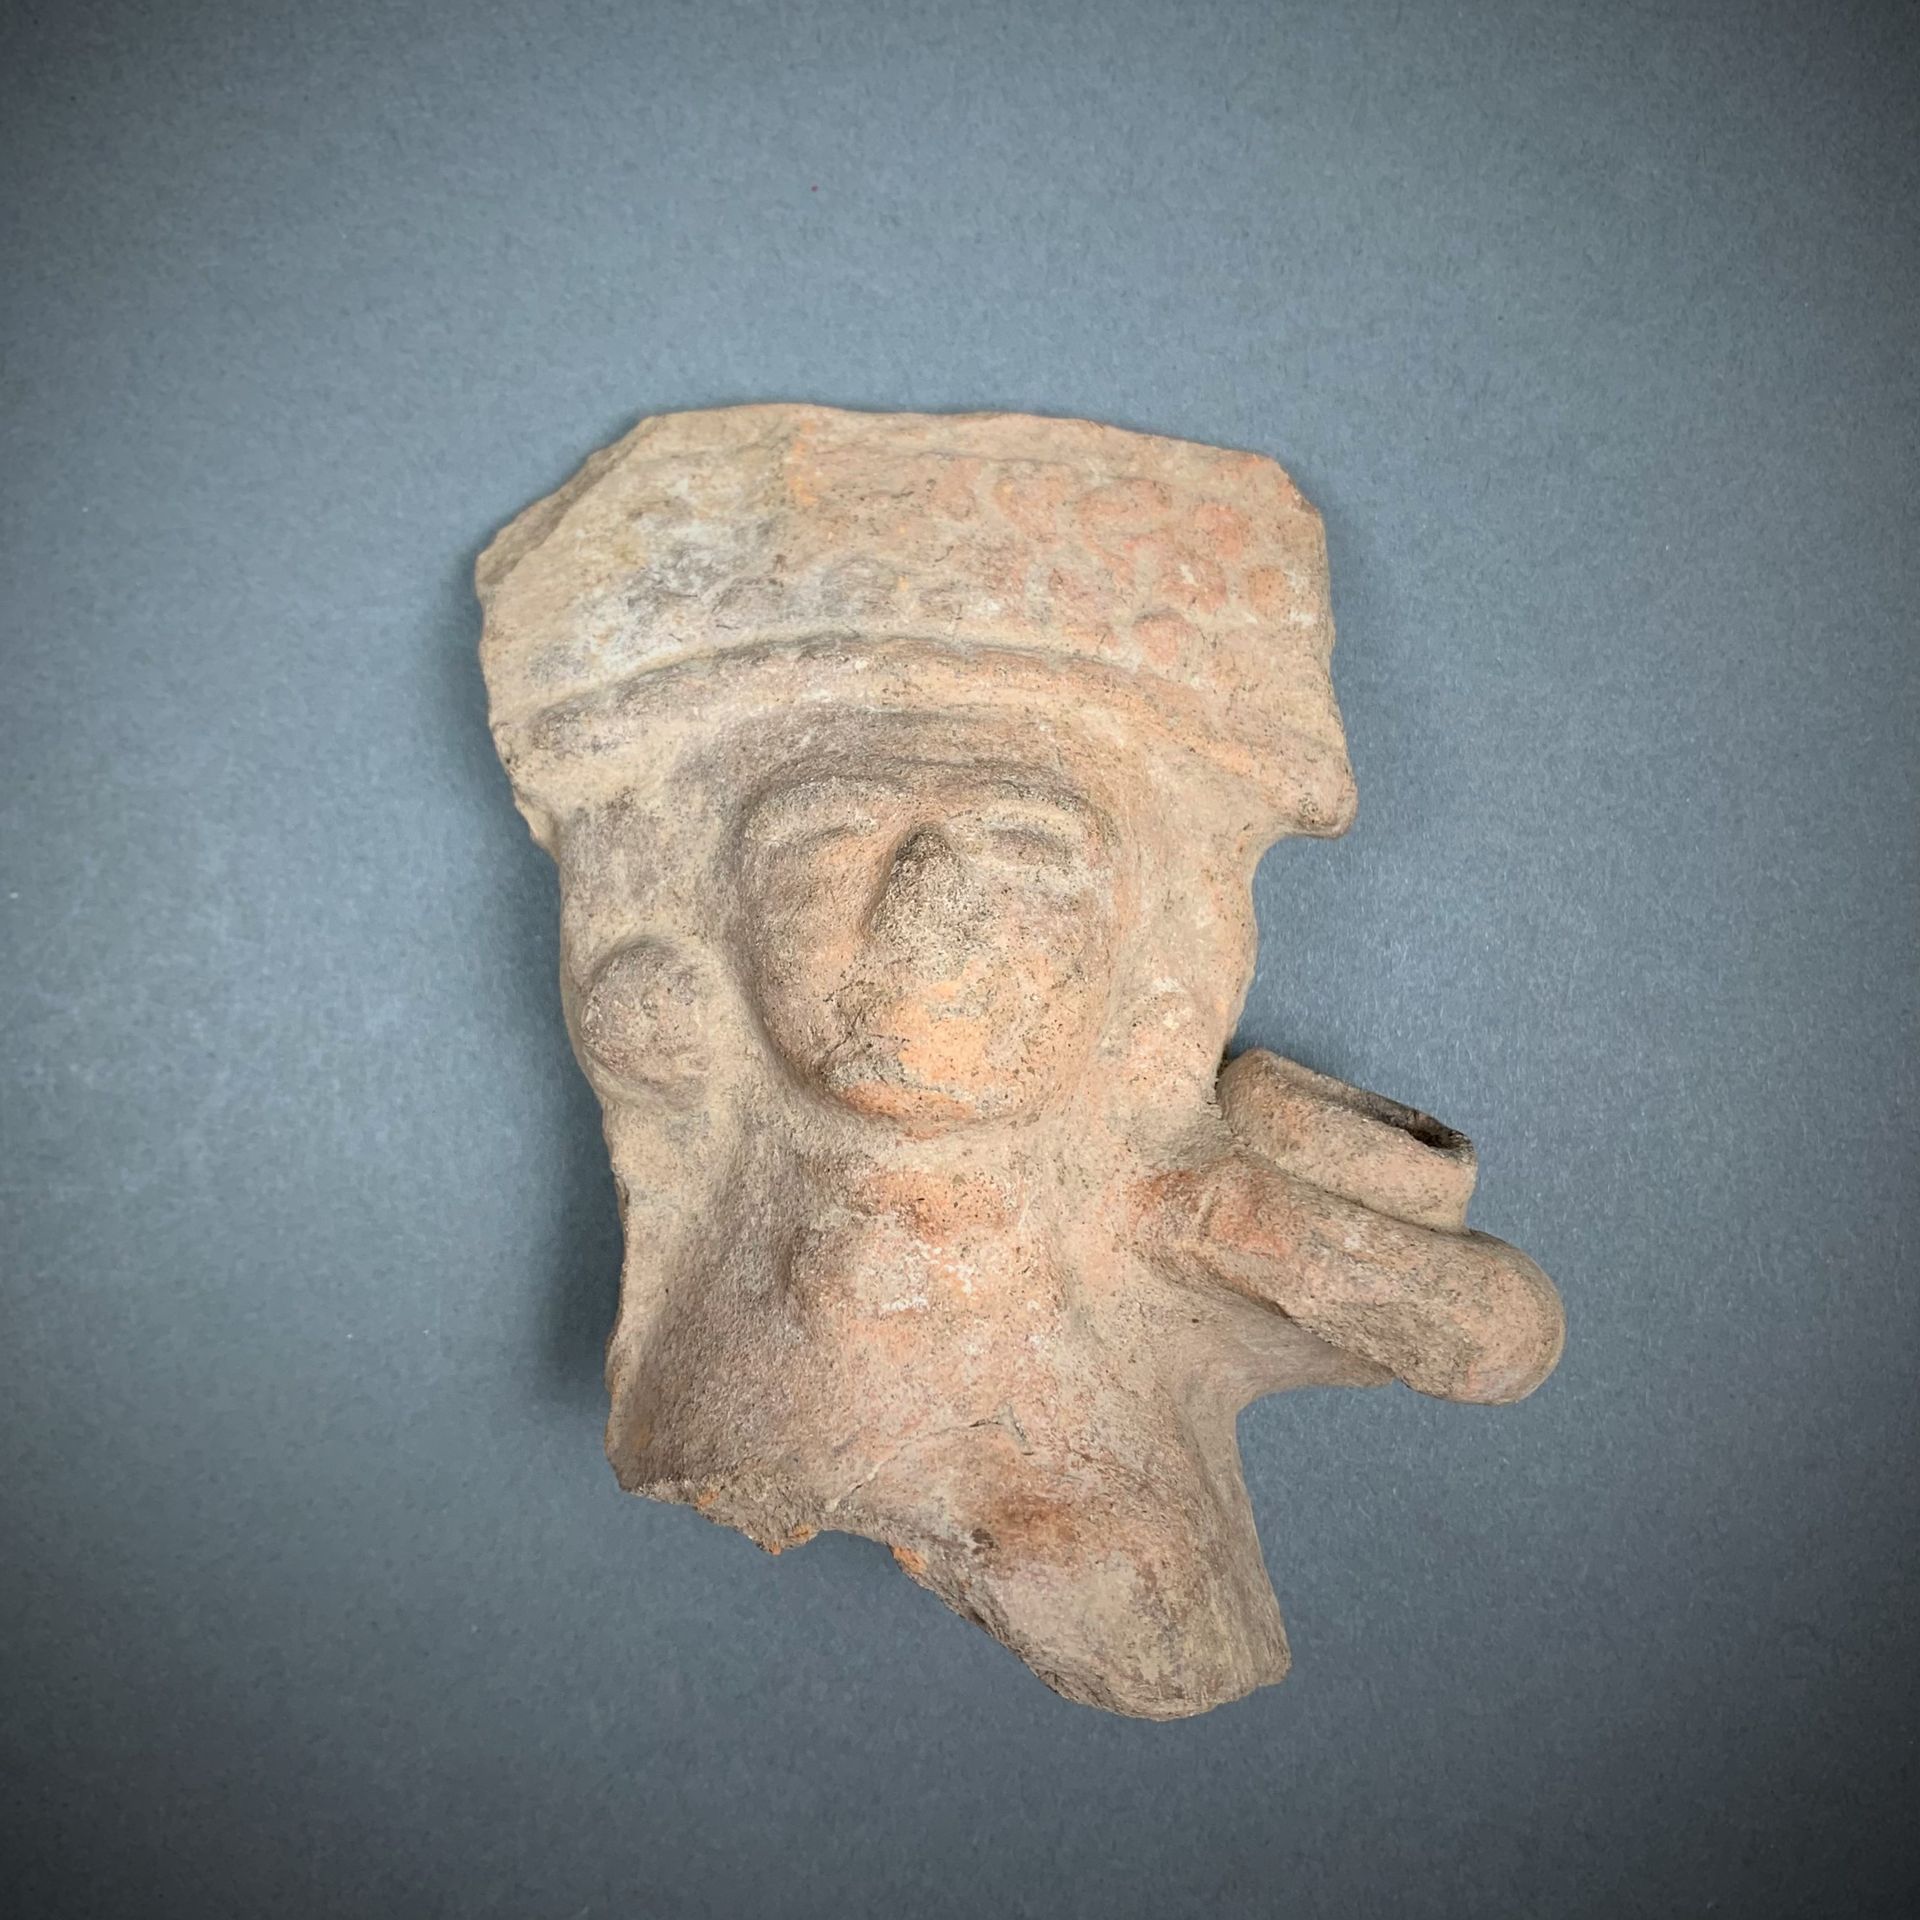 VERACRUZ, Mexique, 450-750 ap. J.-C. Character, h. 13.5 cm. This terracotta figu&hellip;